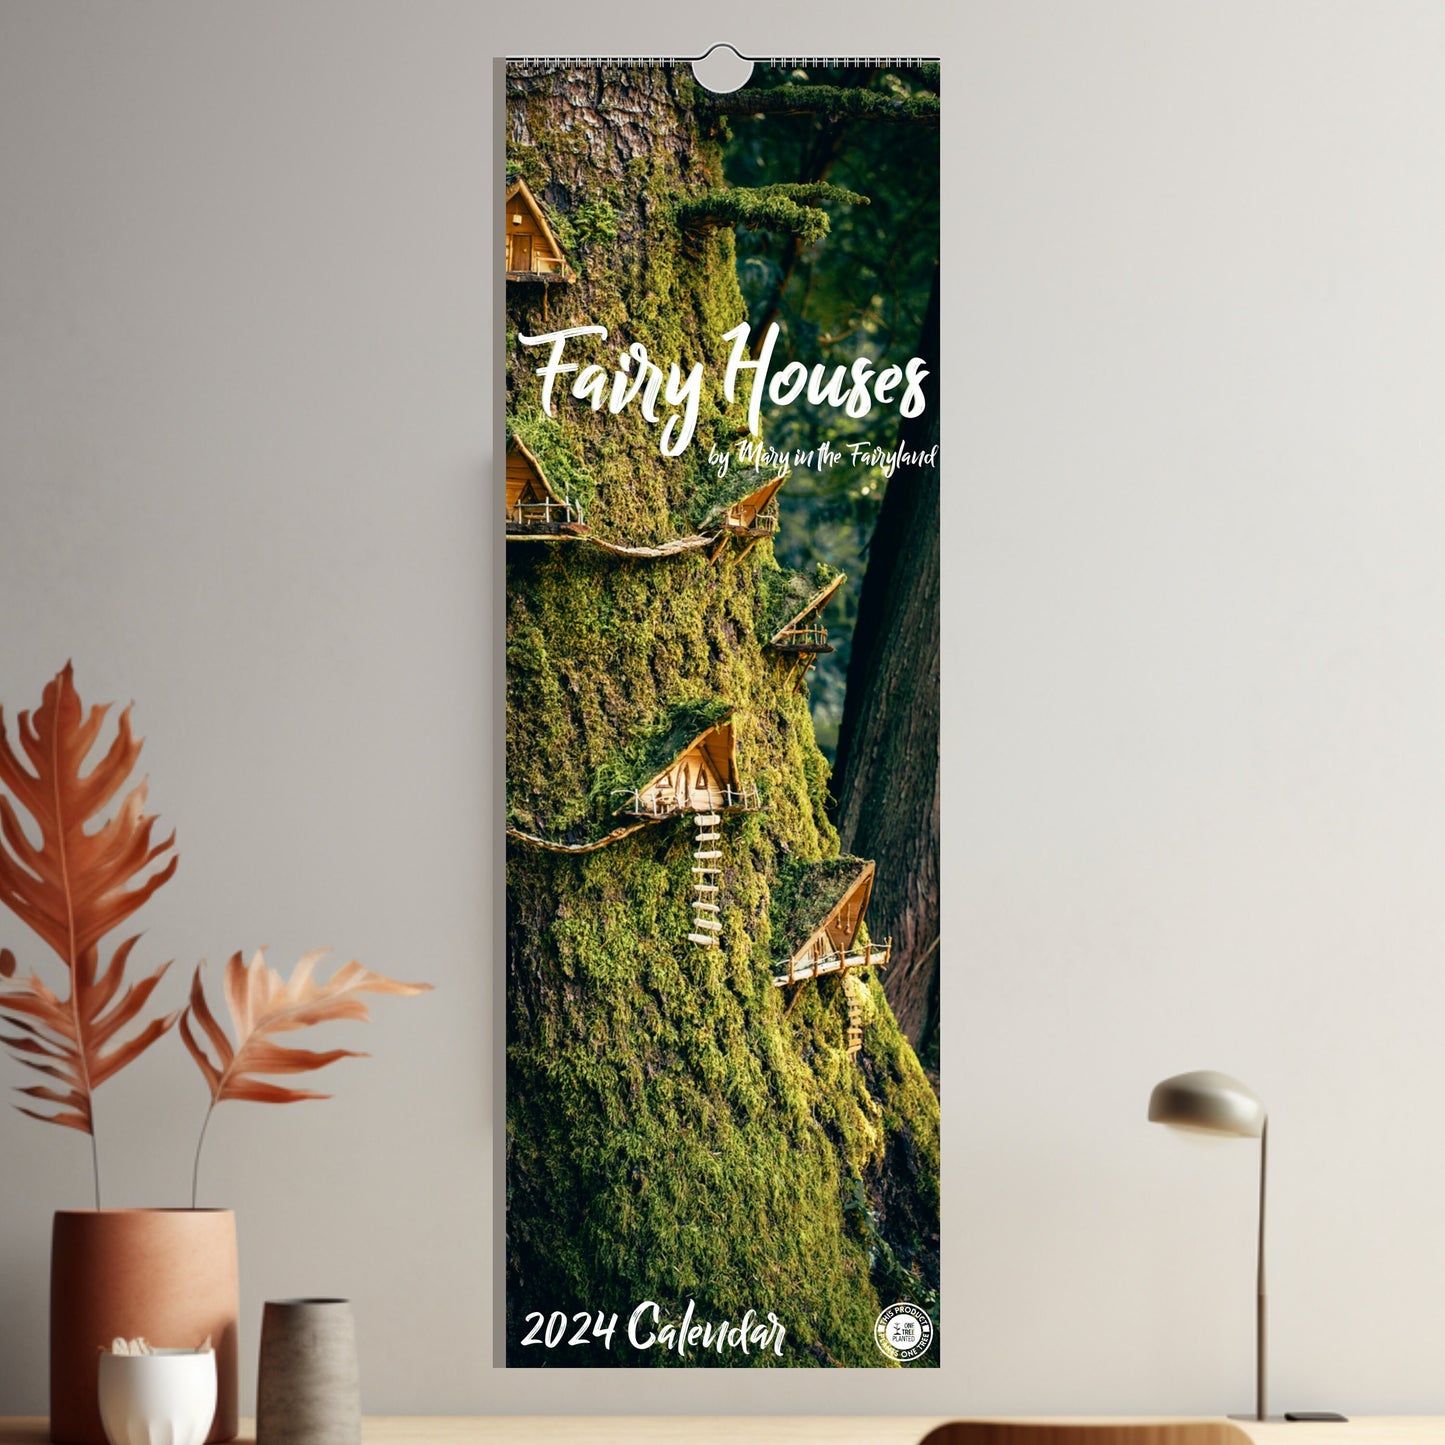 Fairy Houses Wall Calendar 2024: By Mary in the Fairyland (International)